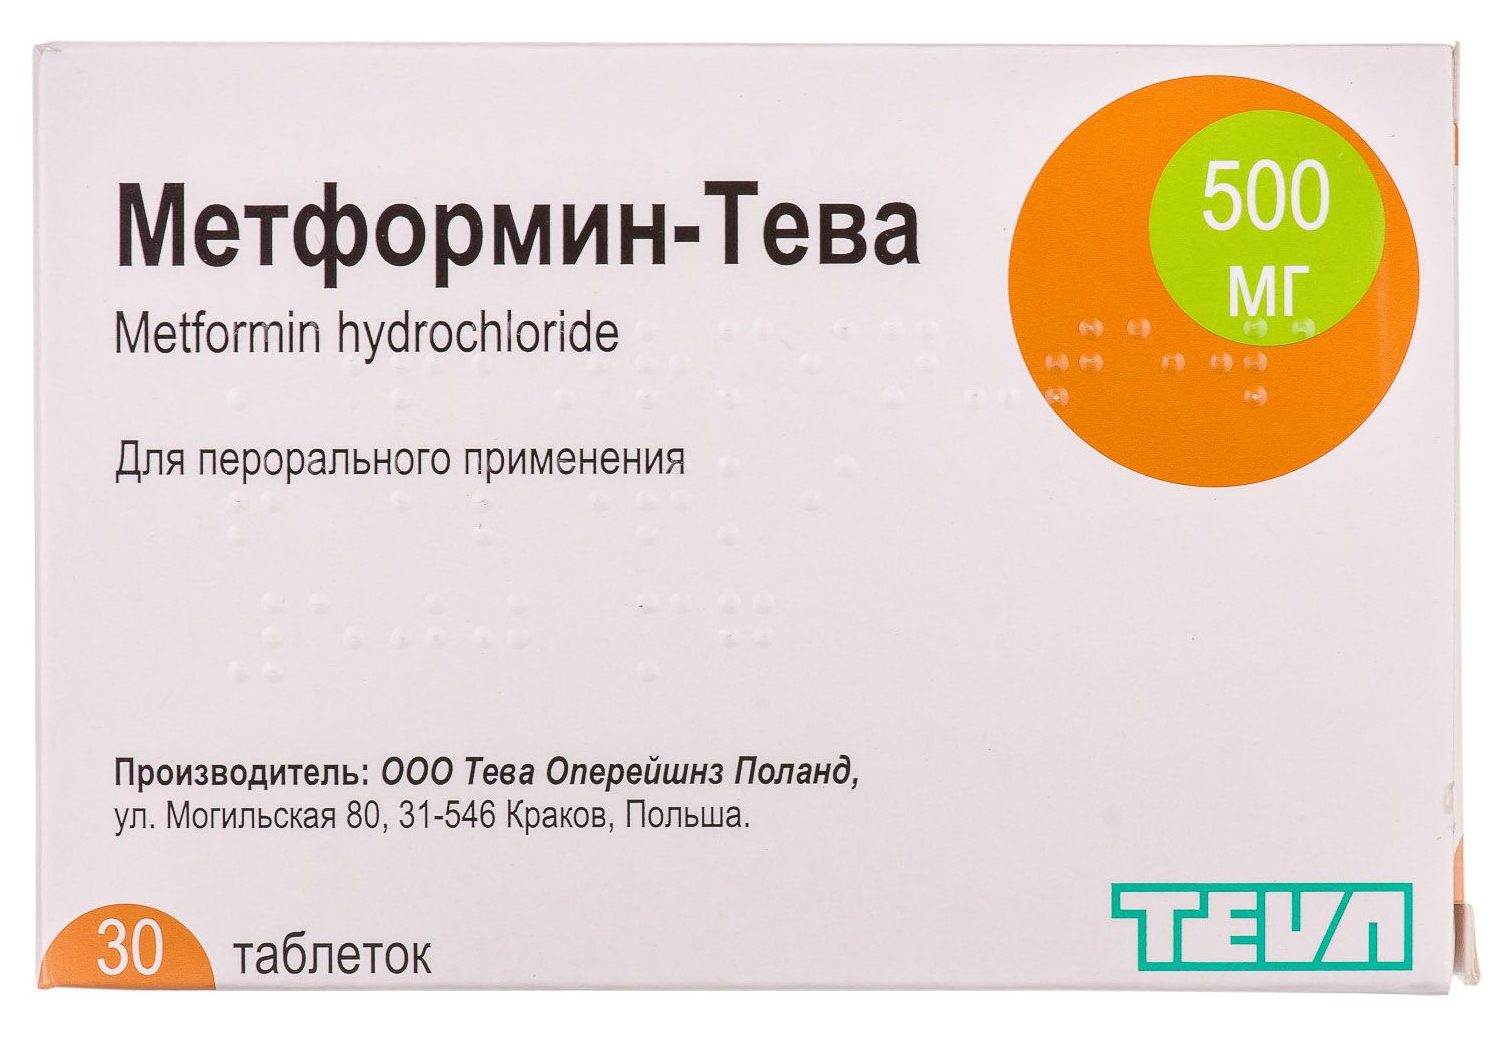 Метформин производители отзывы. Метформин-Тева 1000 мг производитель. Метформин 500 мг производитель. Метформин Тева 500. Метформин Тева 850 мг.